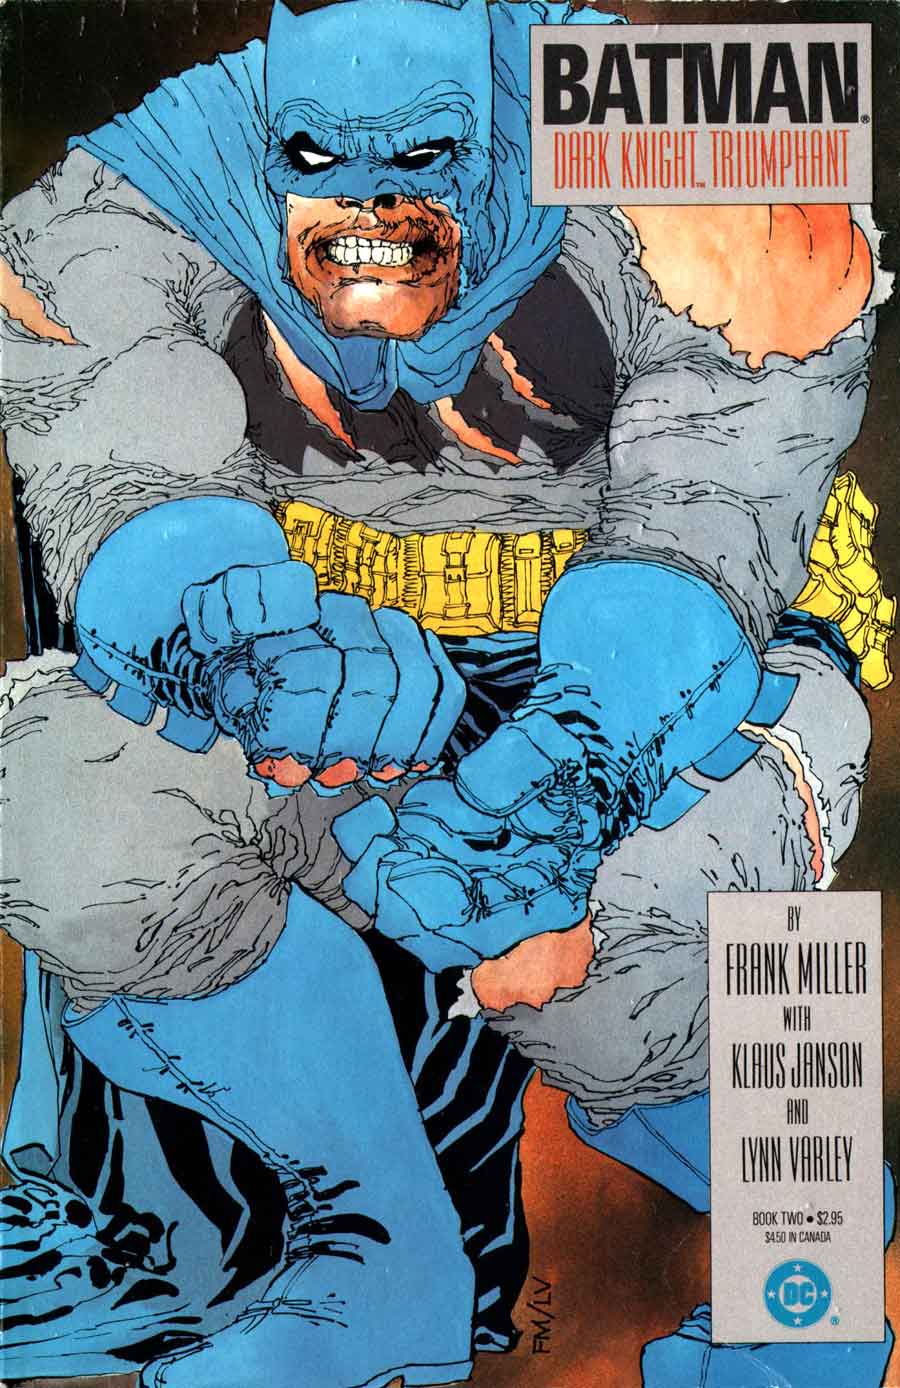 Batman: The Dark Knight #2 - Frank Miller art & cover - Pencil Ink